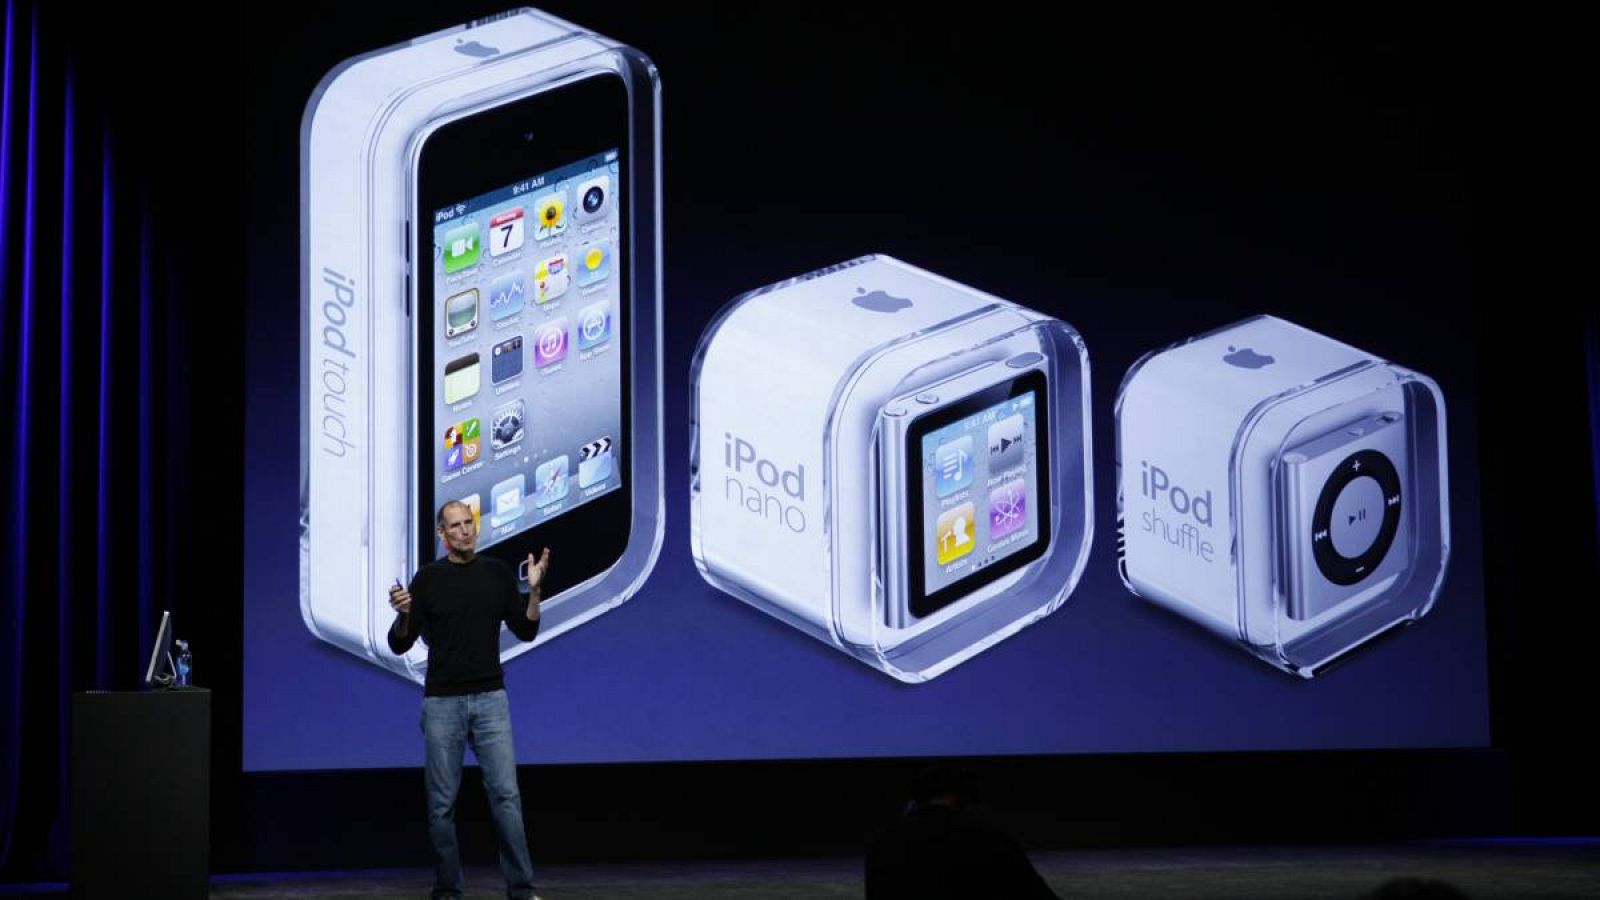 Steve Jobs presentando el iPod Nano, Shuffle y Touch en San Francisco.